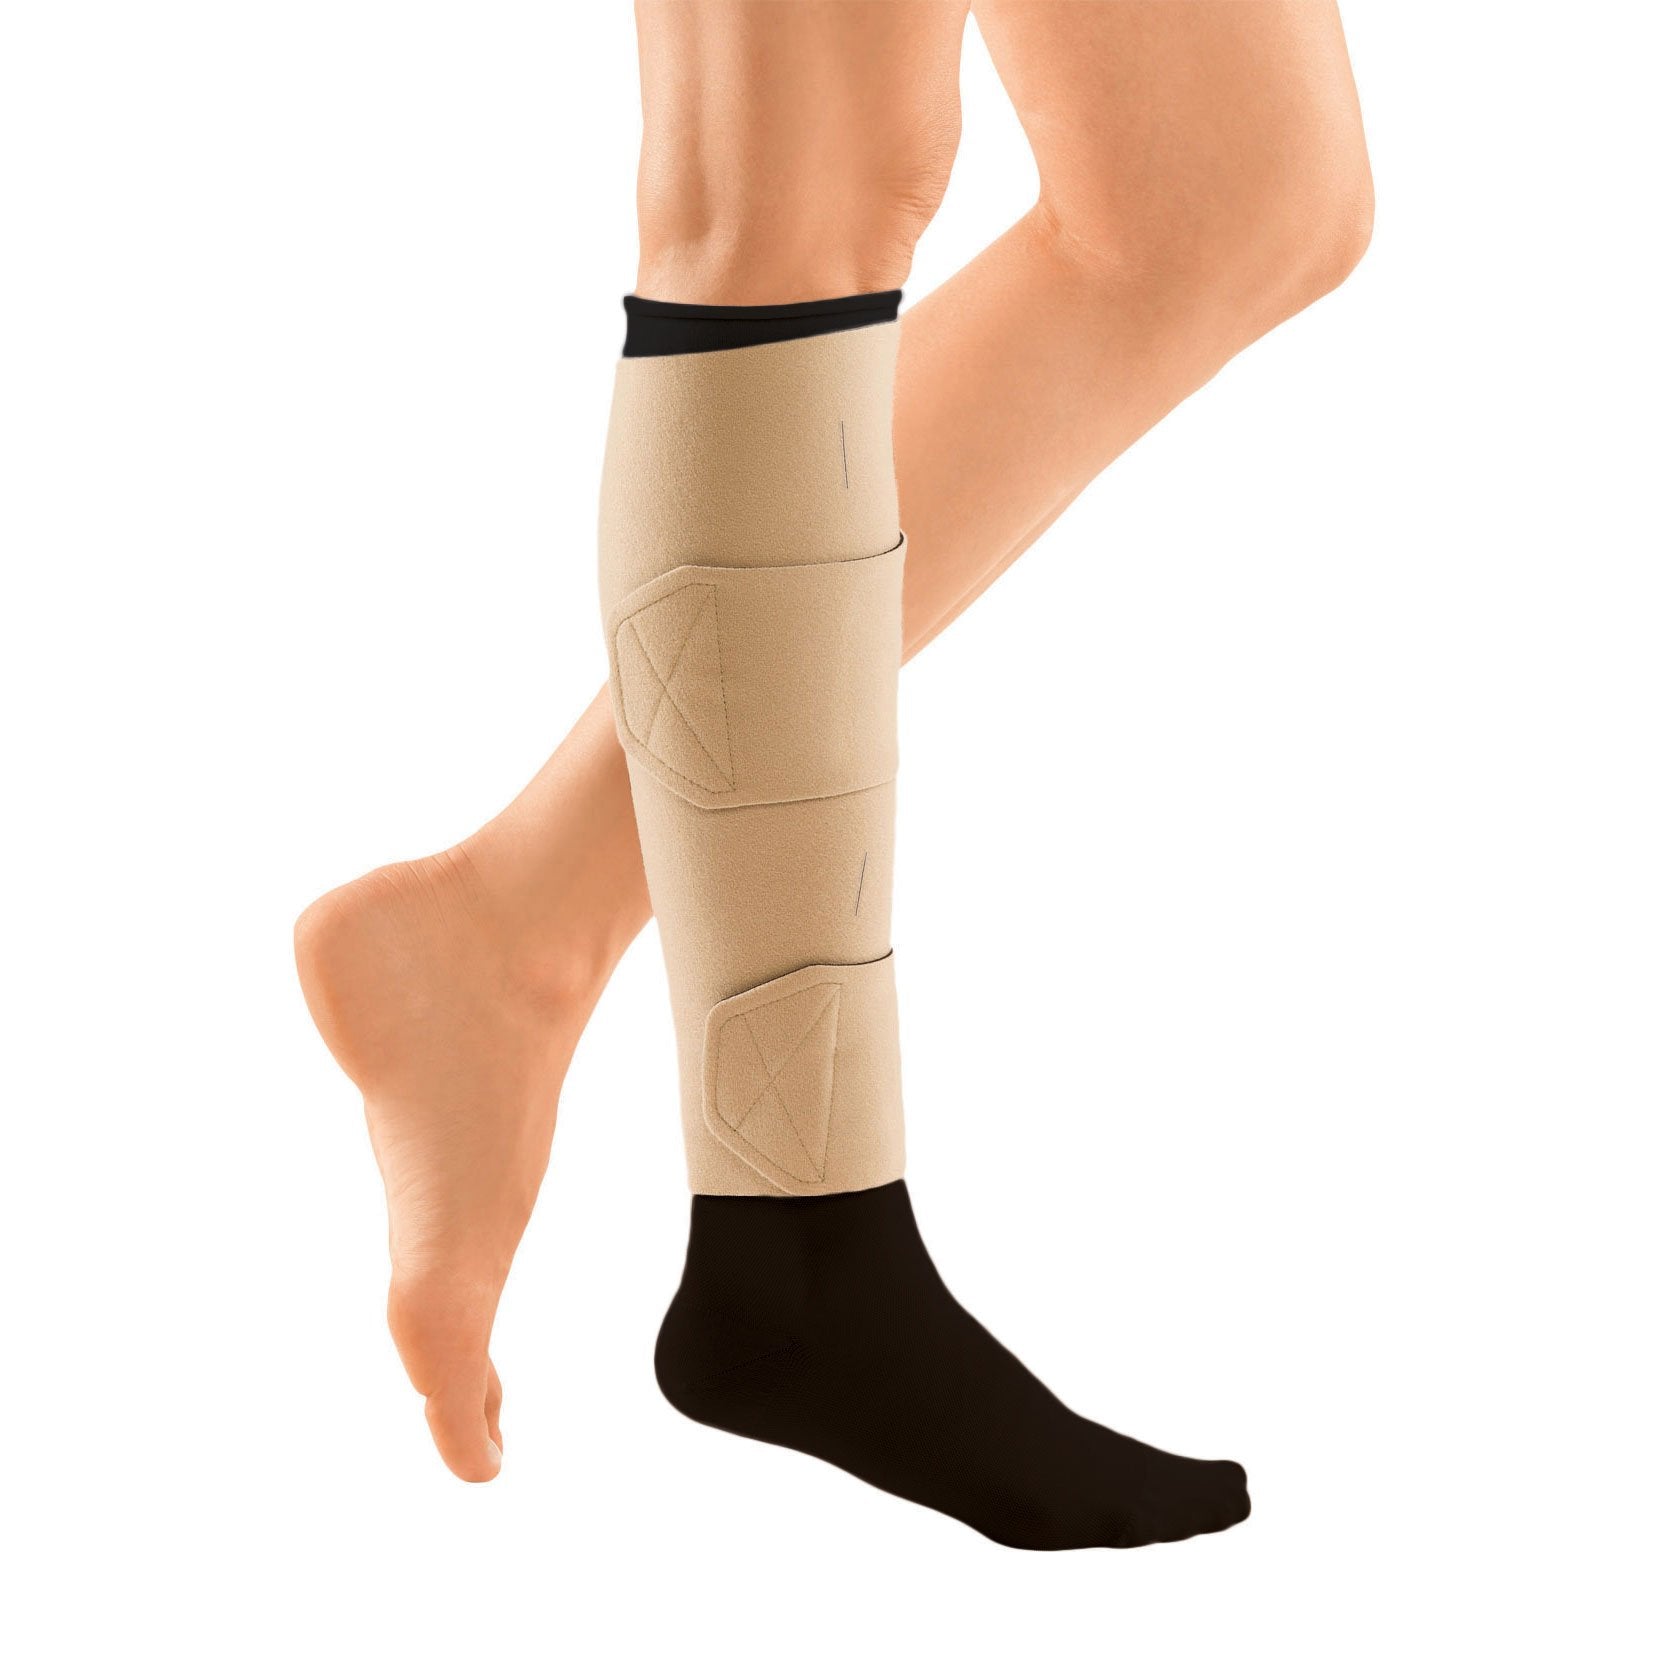 Circaid Lower Leg Reduction Kit